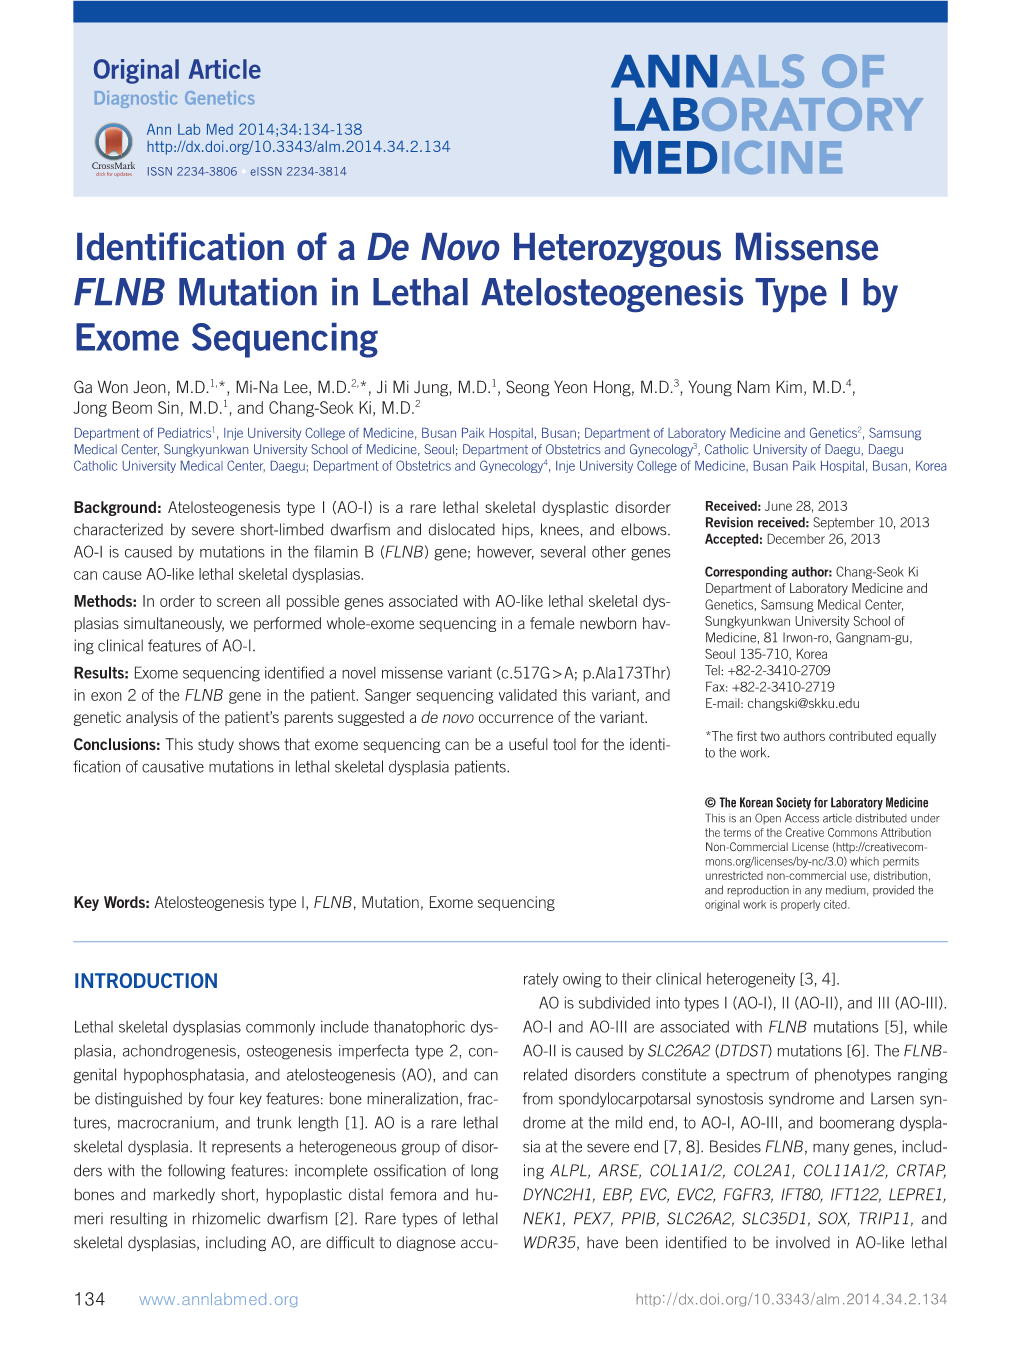 Identification of a De Novo Heterozygous Missense FLNB Mutation in Lethal Atelosteogenesis Type I by Exome Sequencing